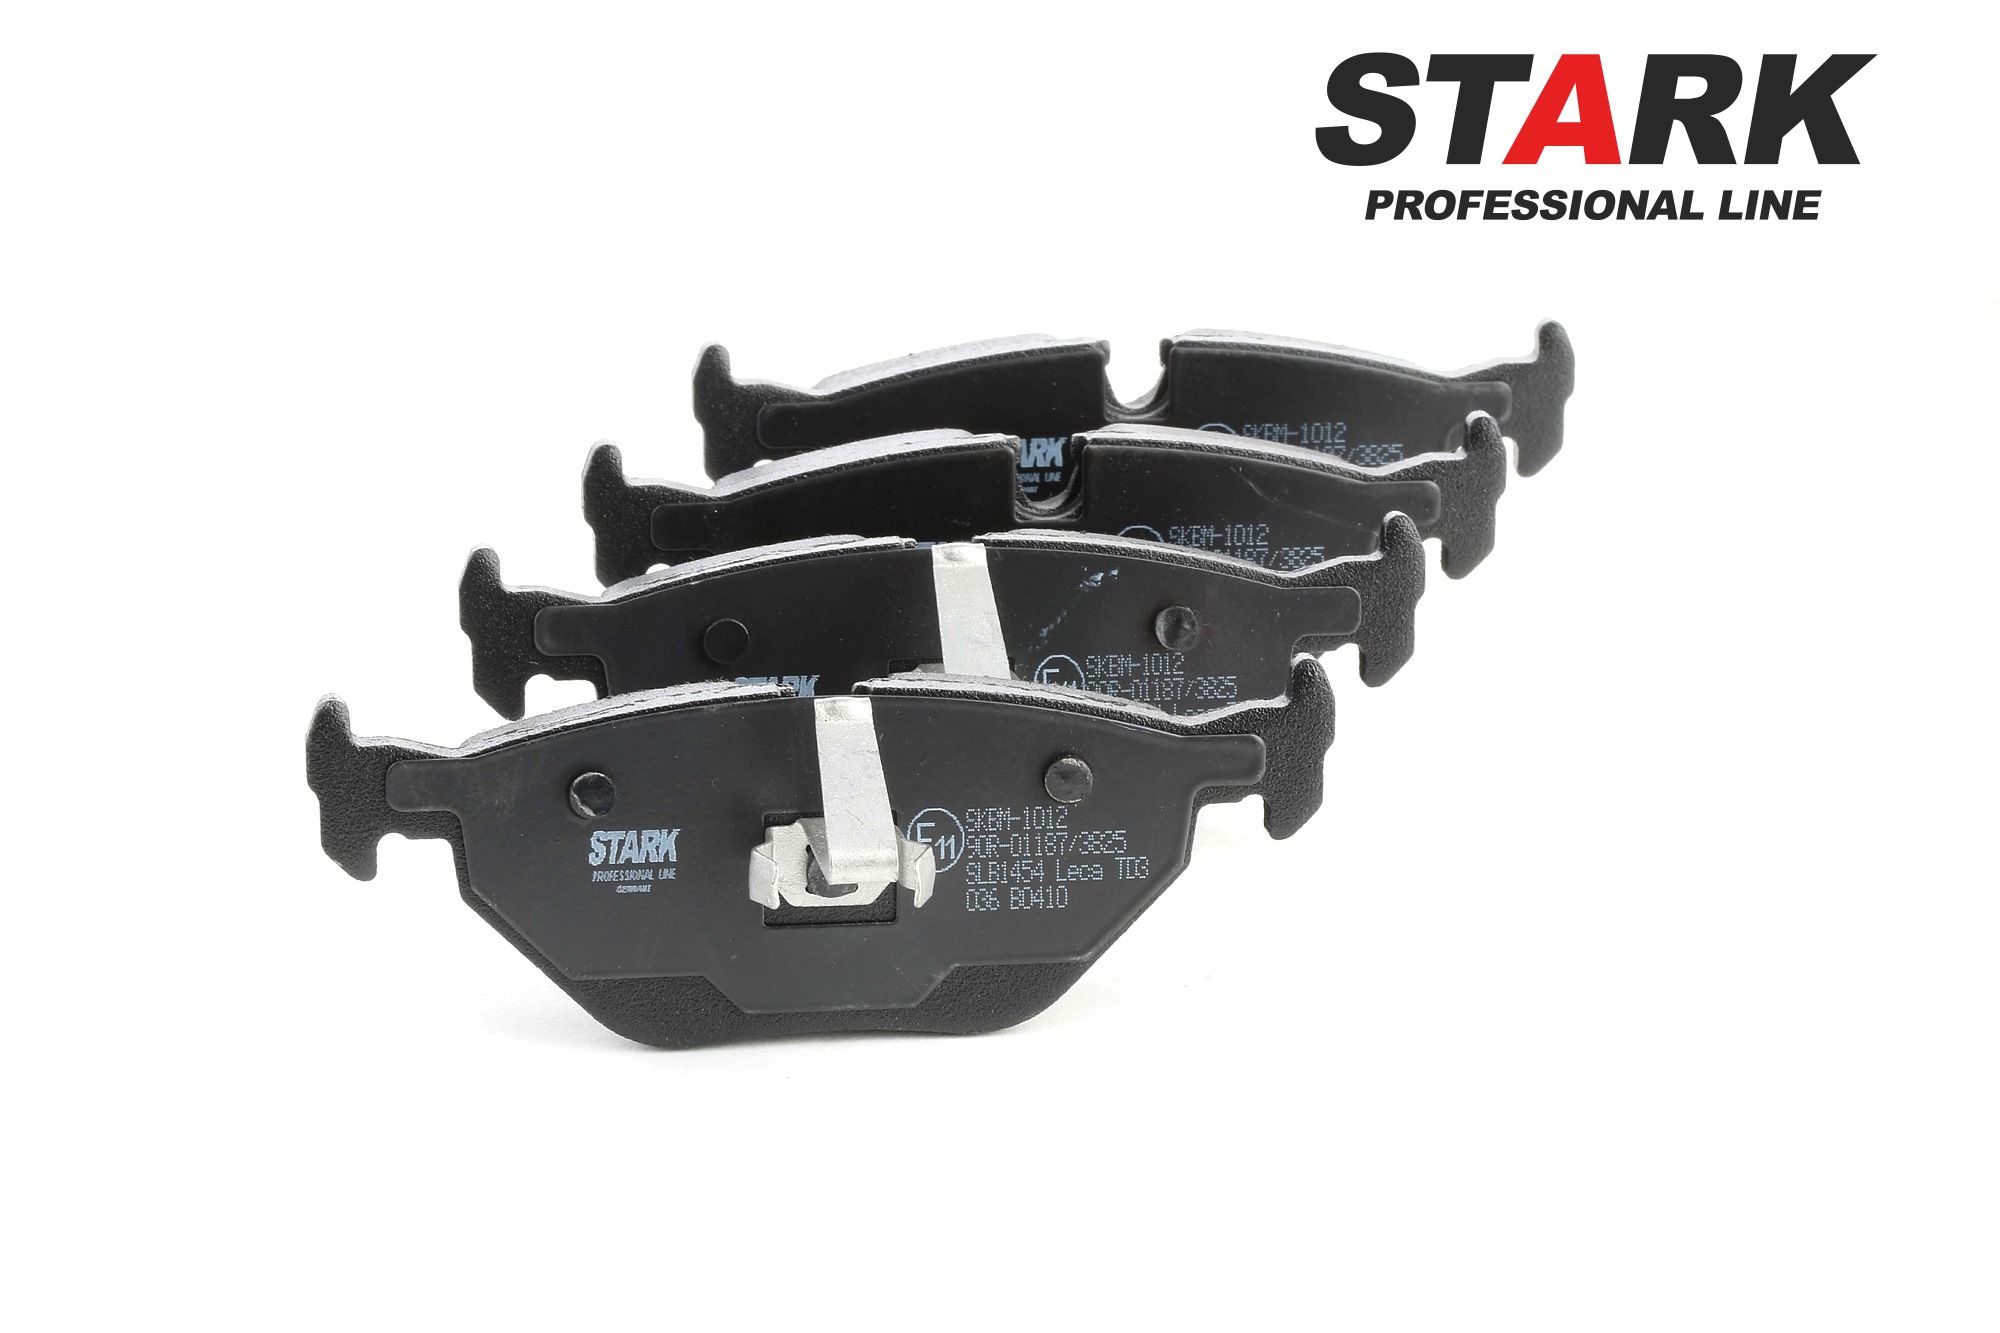 STARK SKBM-1012 Bremsbelagsatz günstig in Online Shop